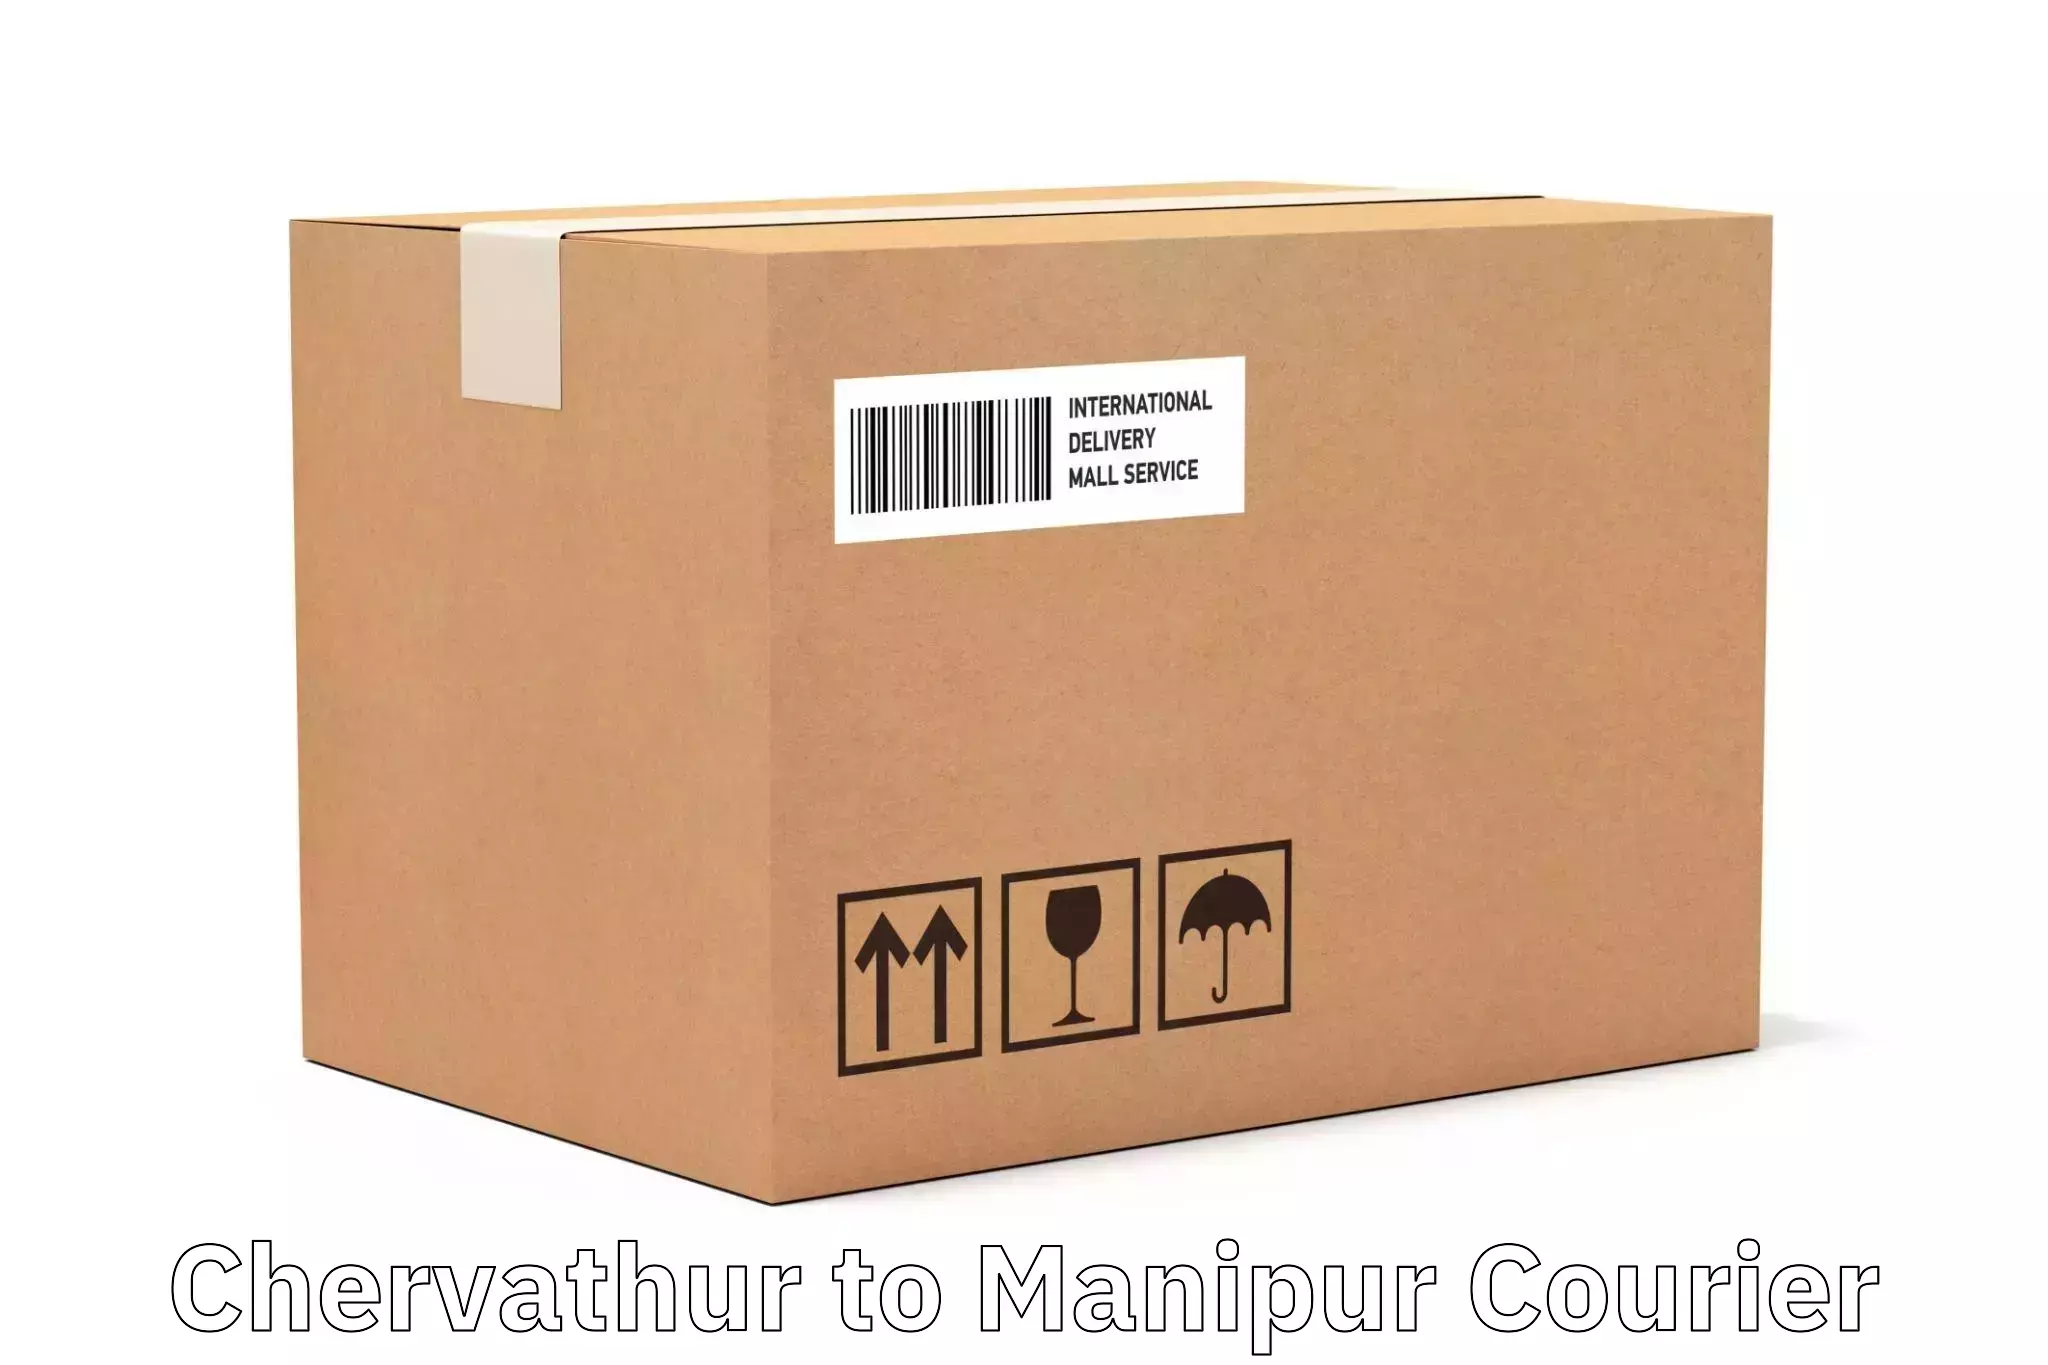 Urban courier service Chervathur to Thoubal